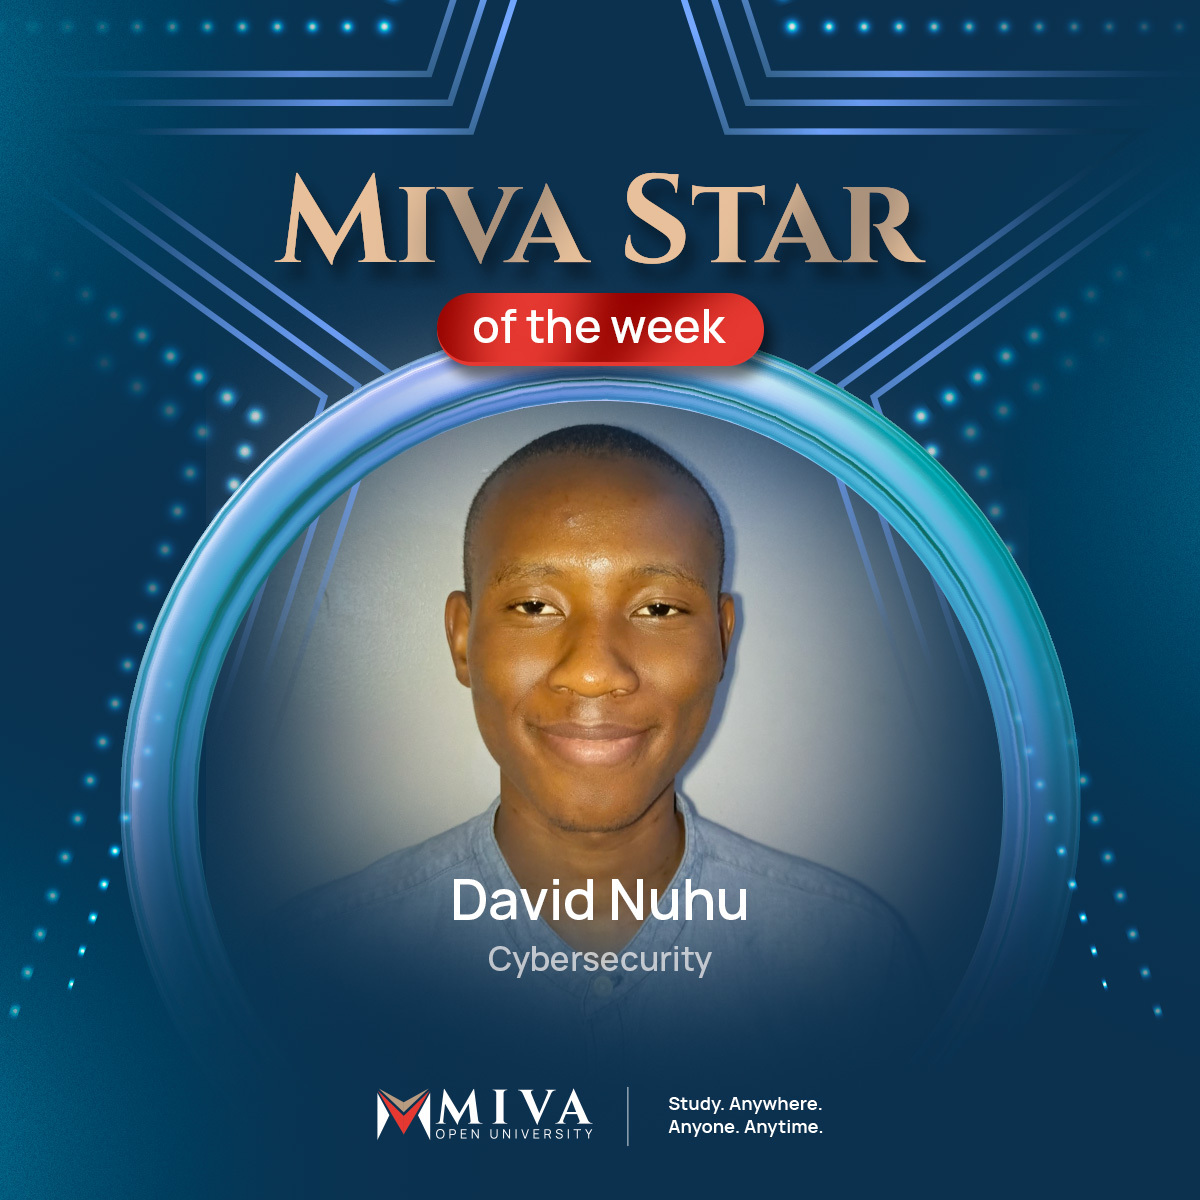 Miva Star of the week